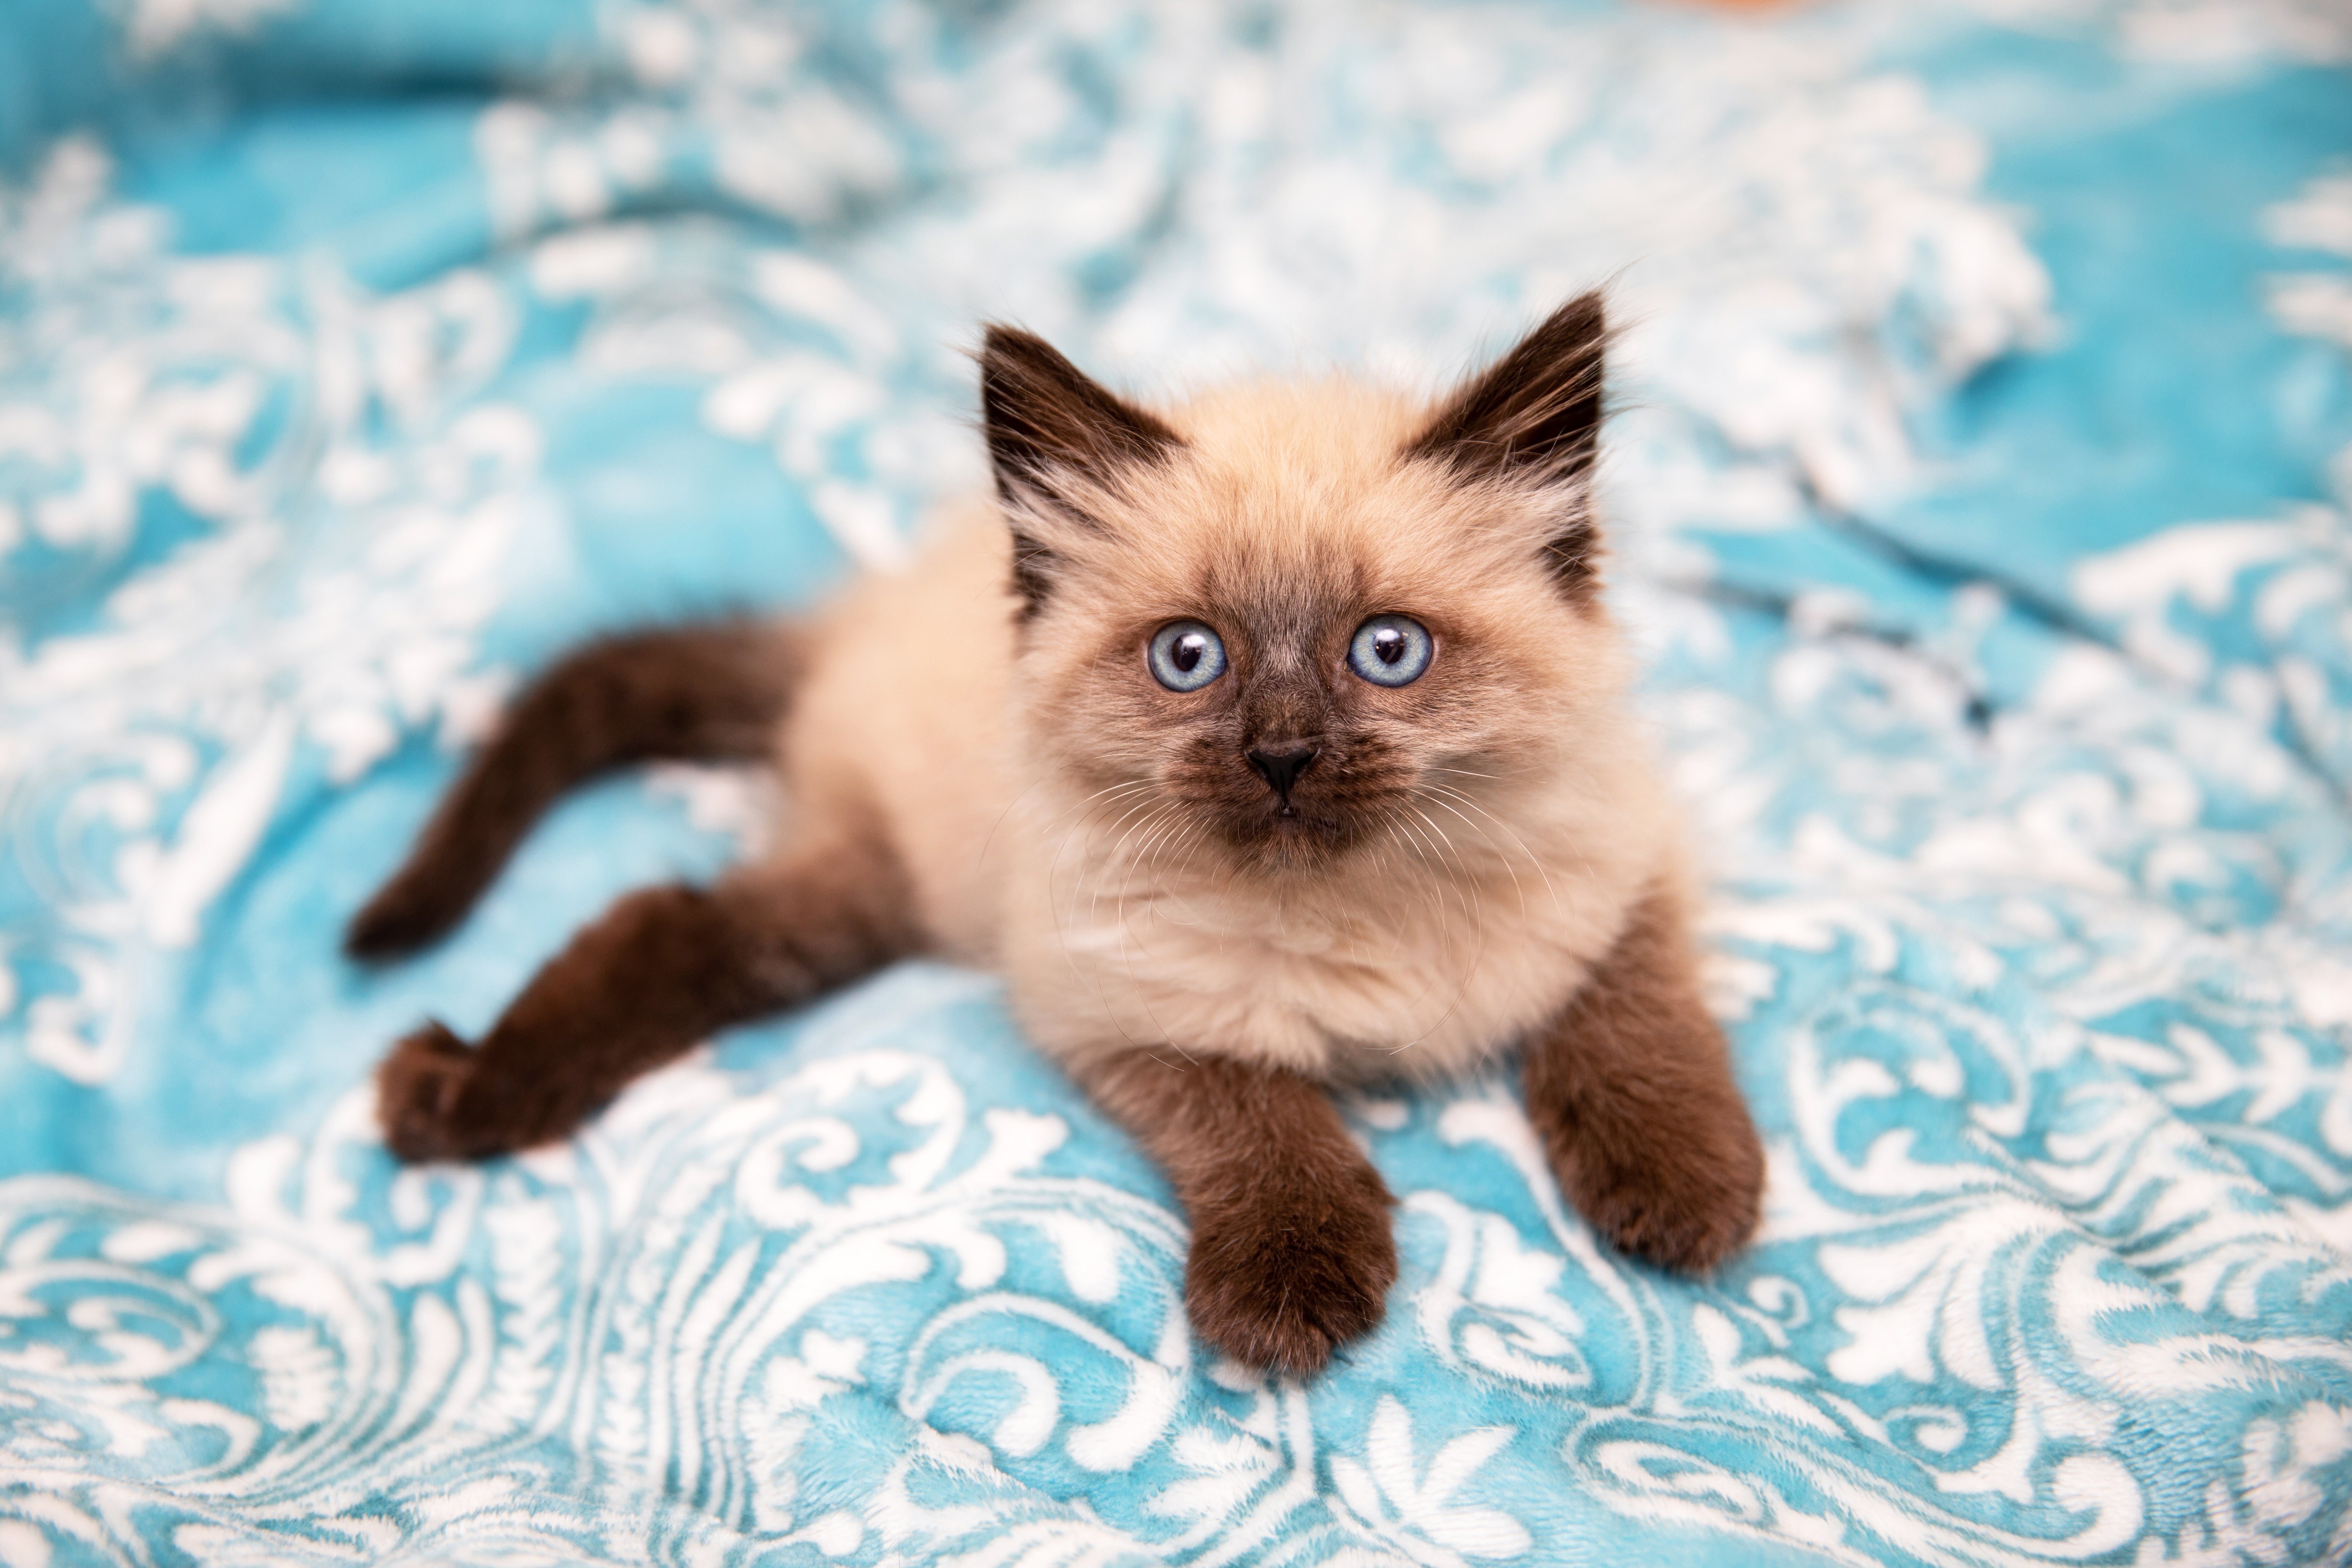 Tiny fuzzy kitten on a blue blanket